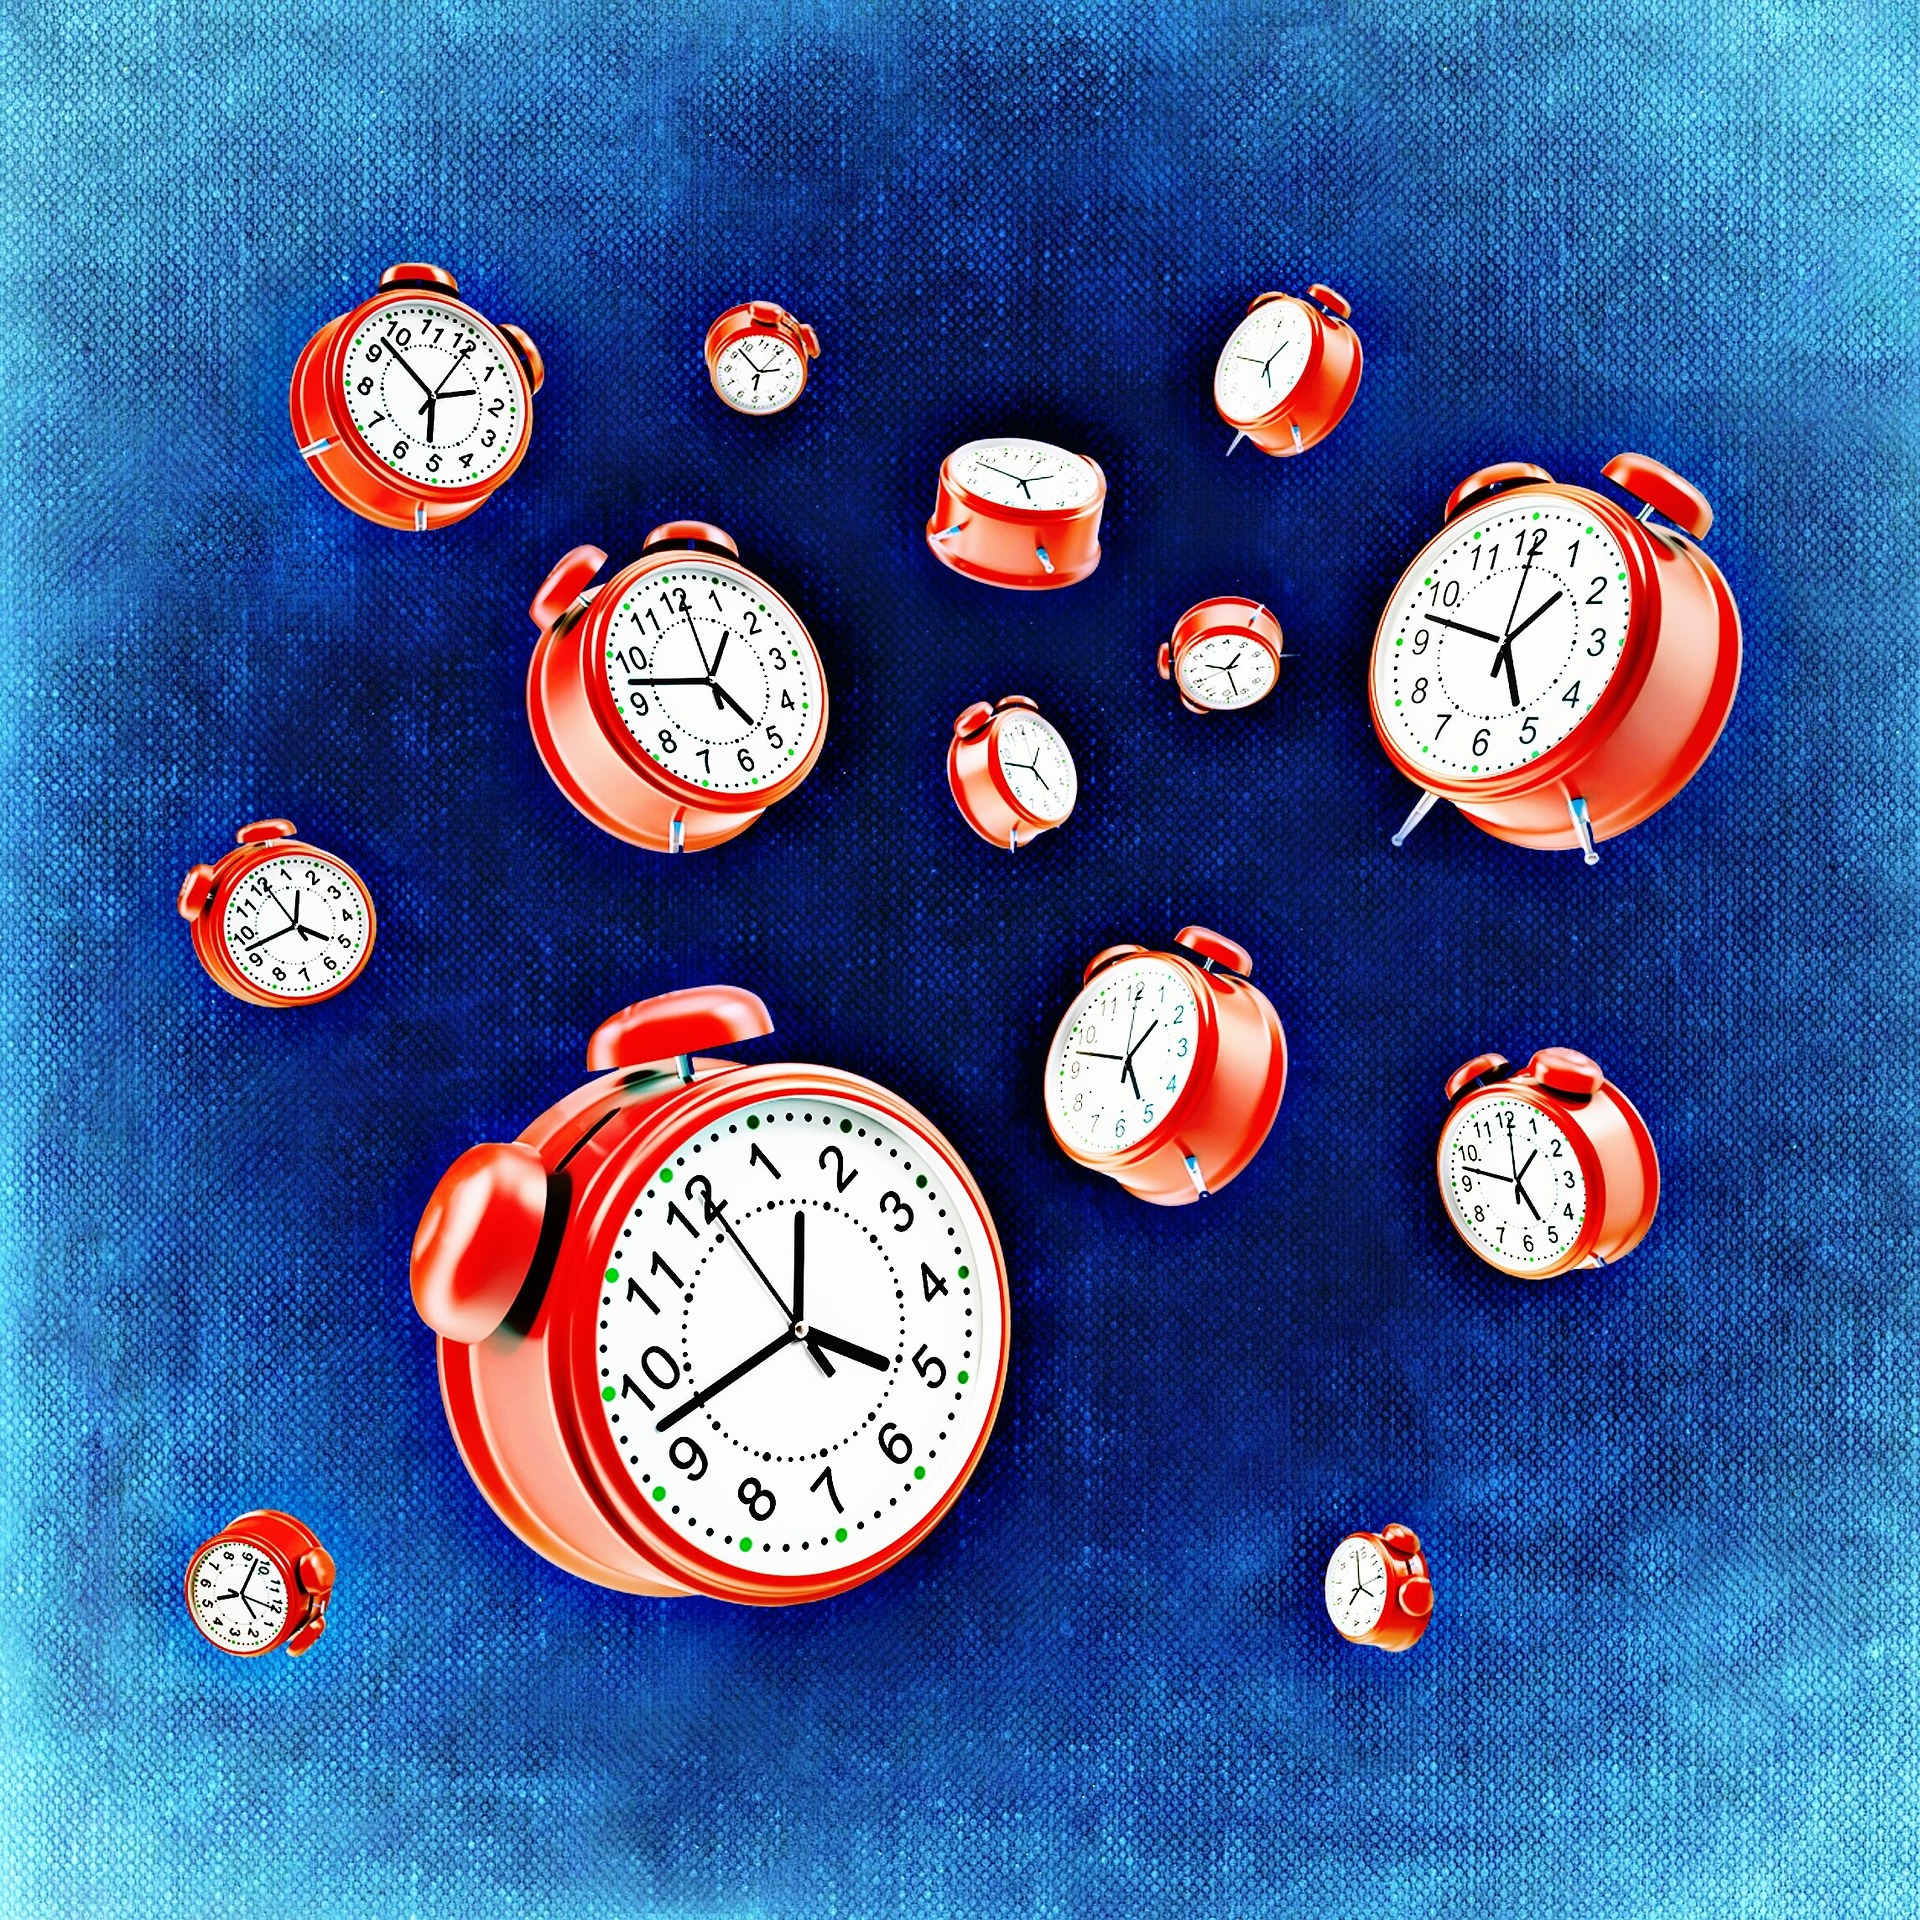 alarm clock bad for health